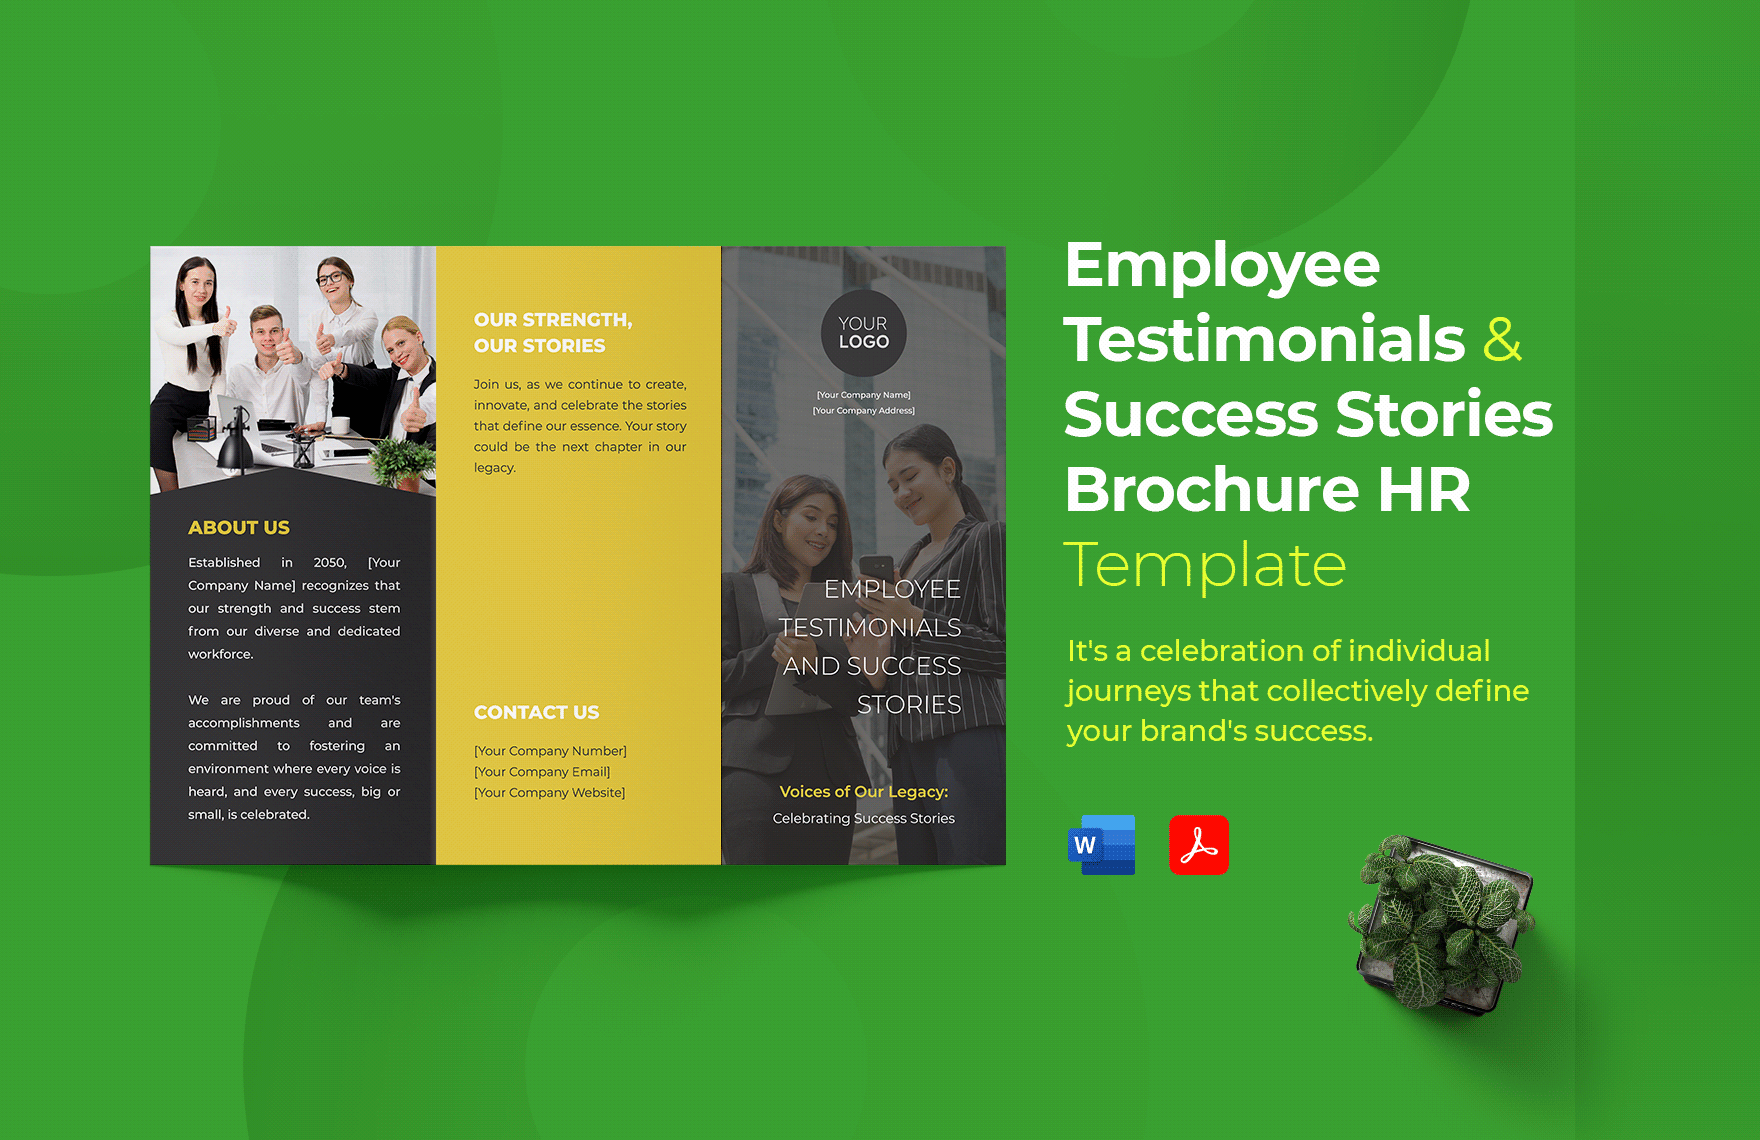 Employee Testimonials and Success Stories Brochure HR Template